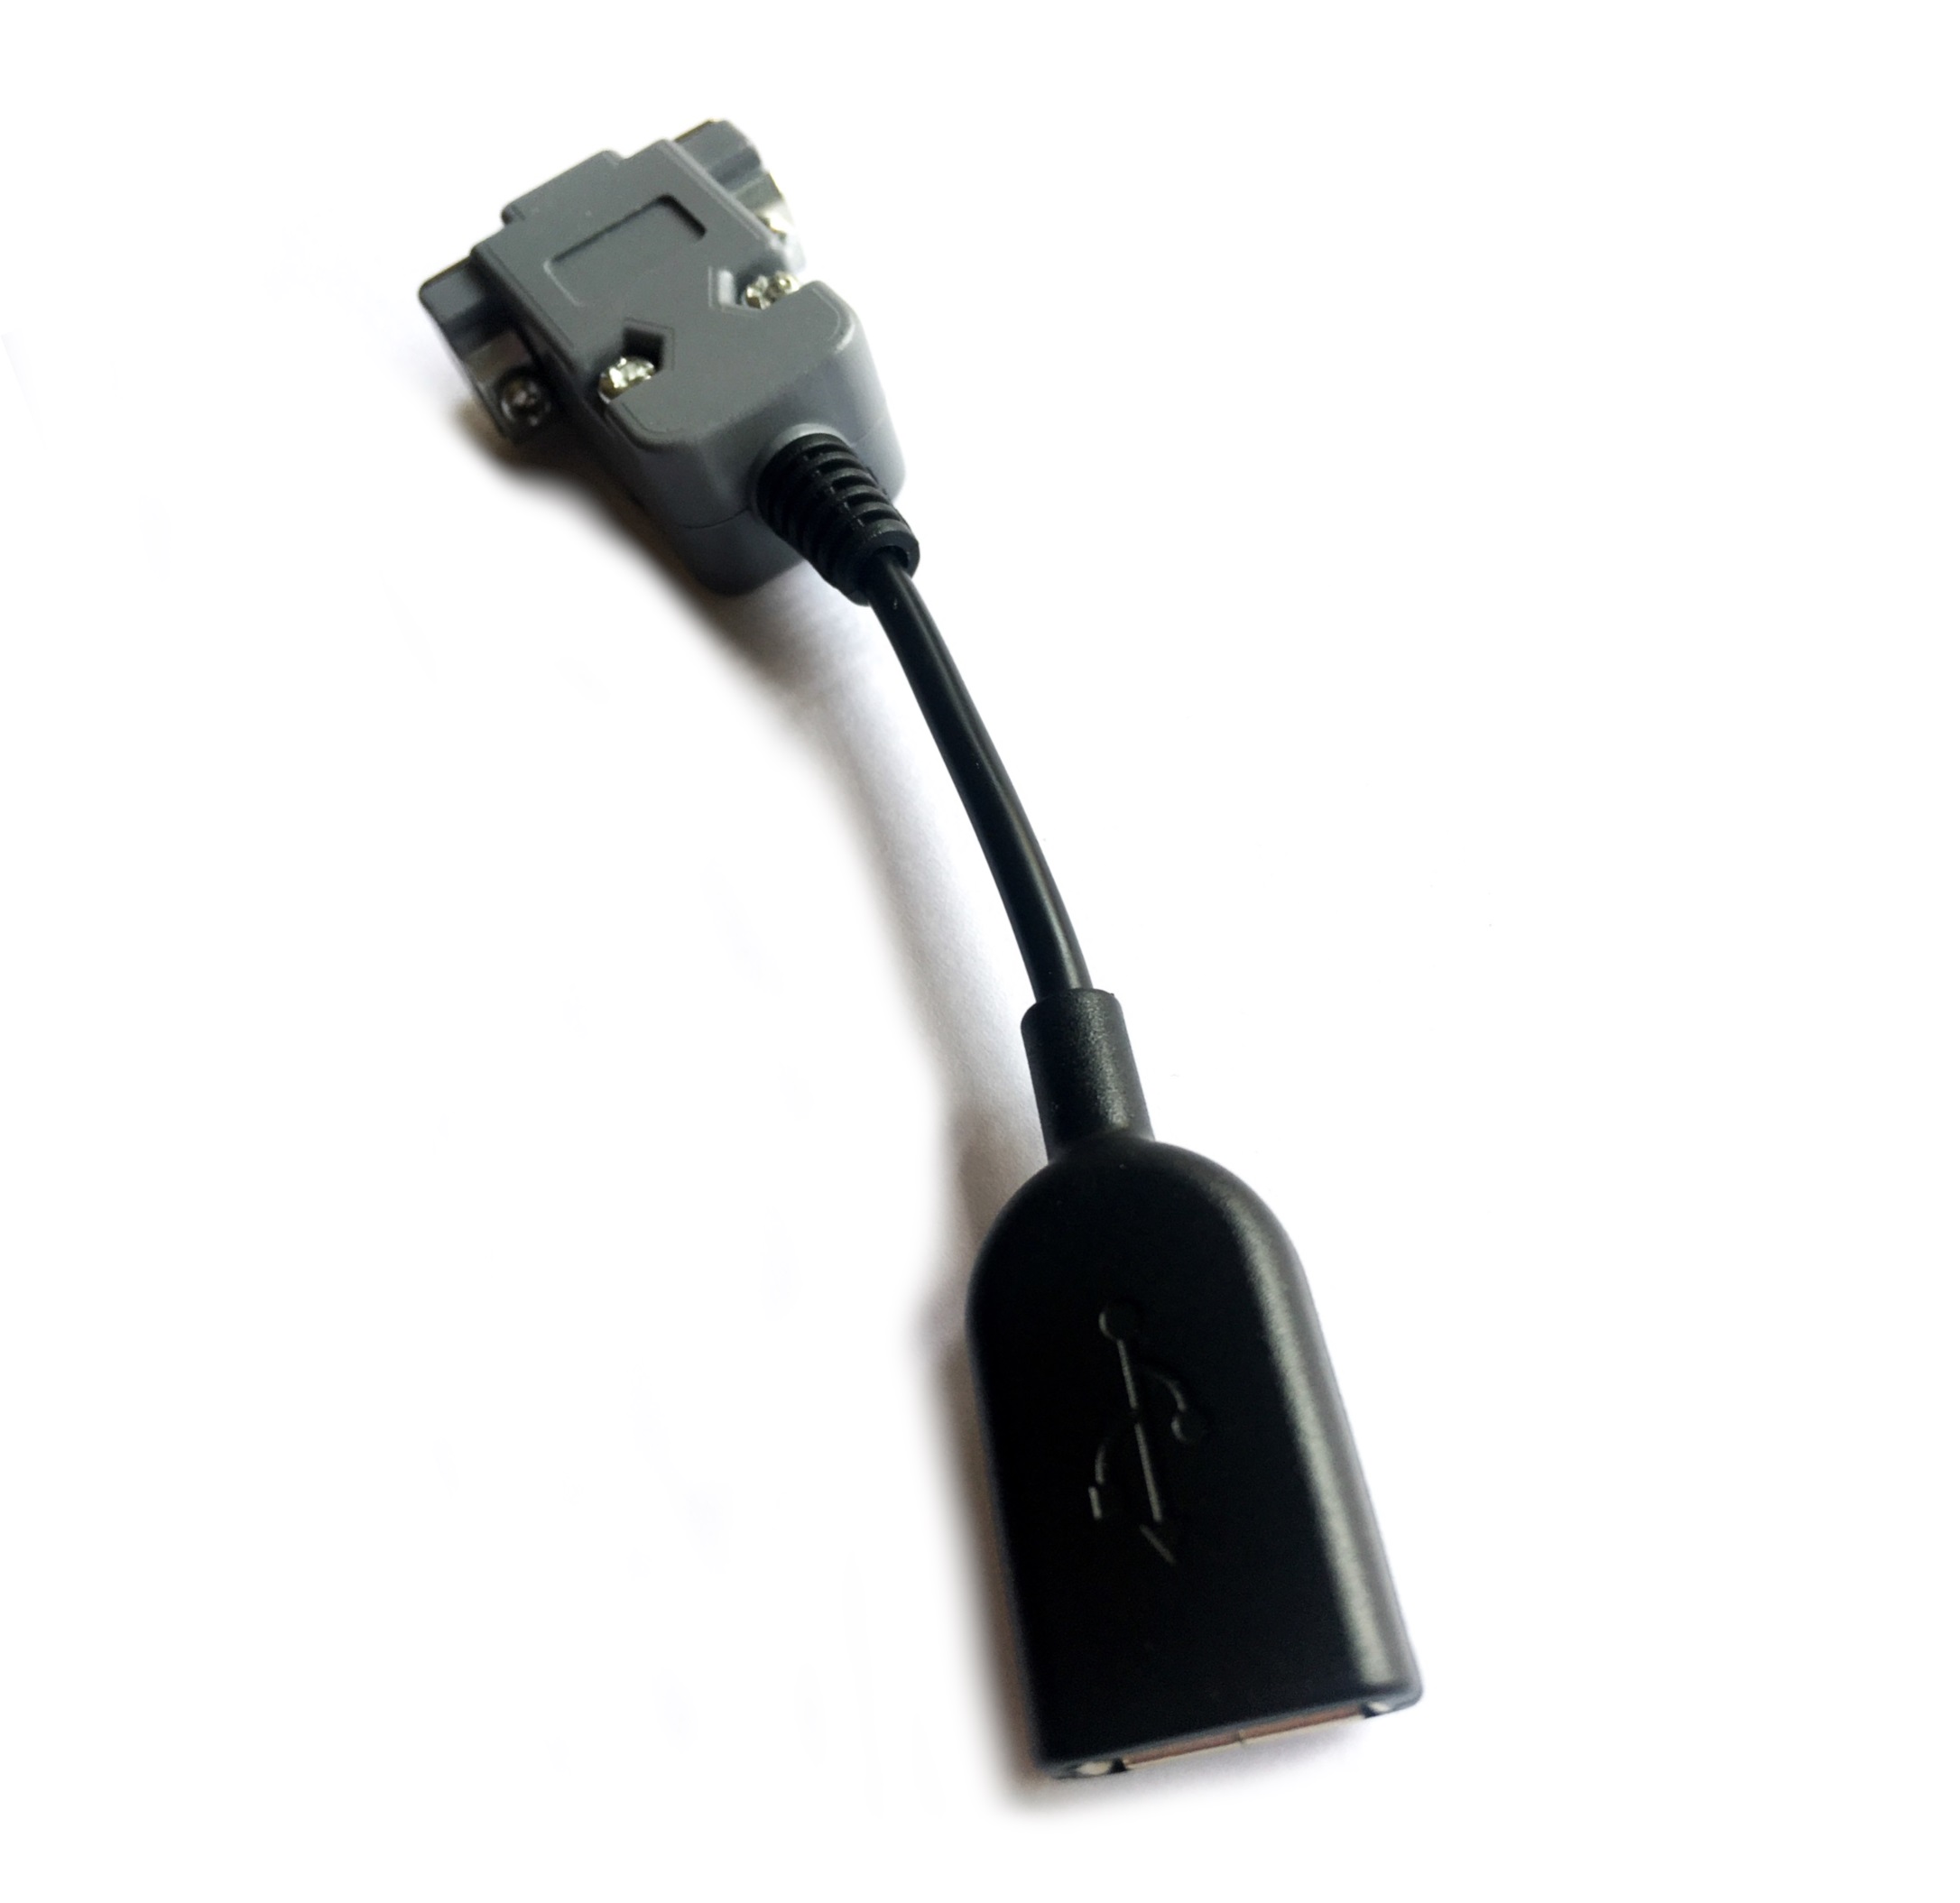 tinkerBOY USB Mouse Amiga Adapter / Converter USB) - tinkerBOY